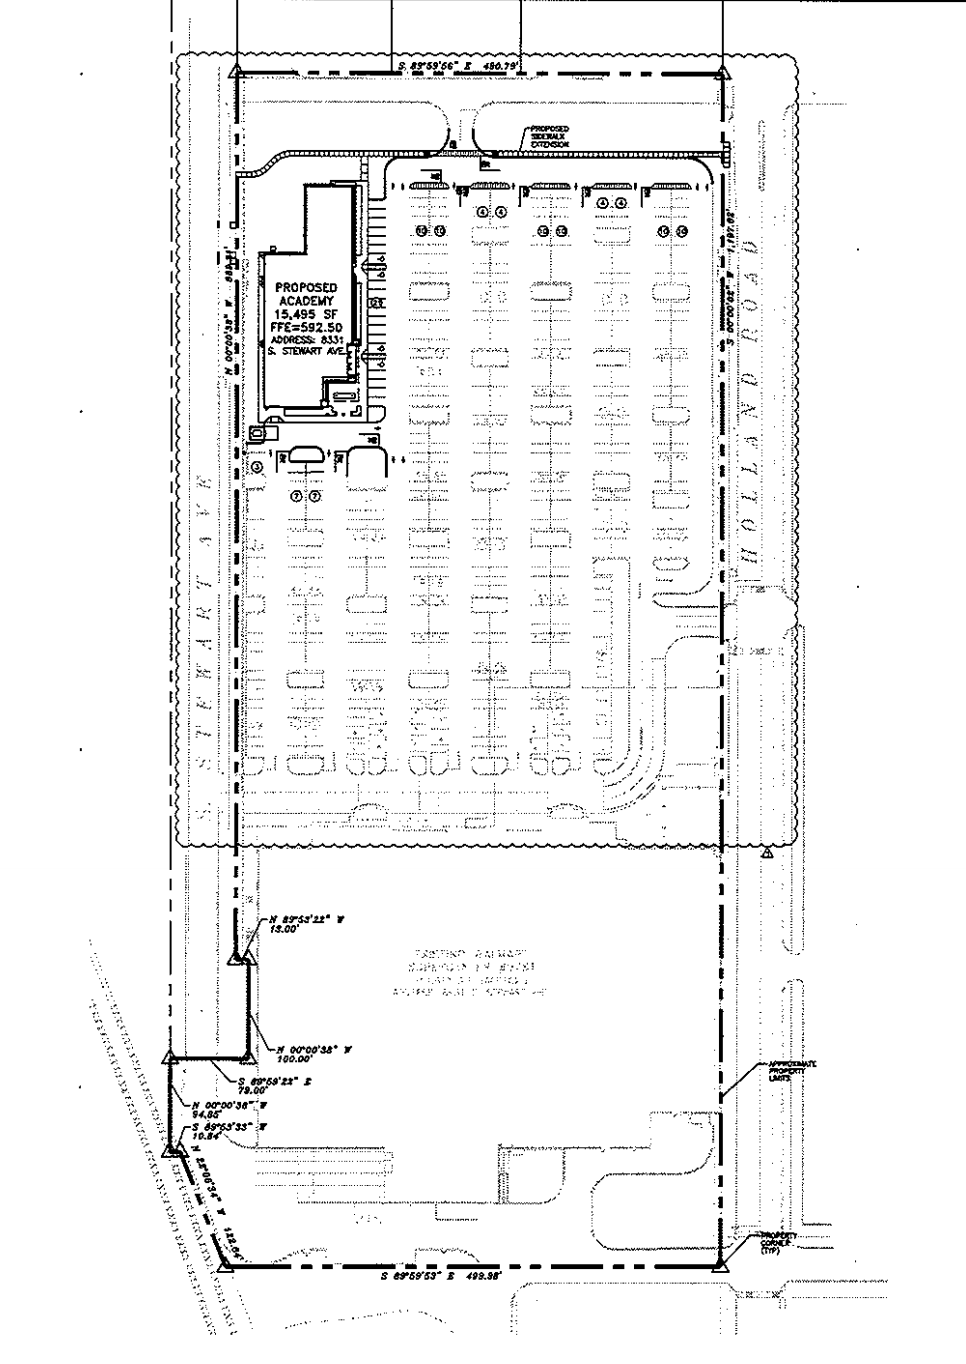 8331 S Stewart Avenue broad site plan